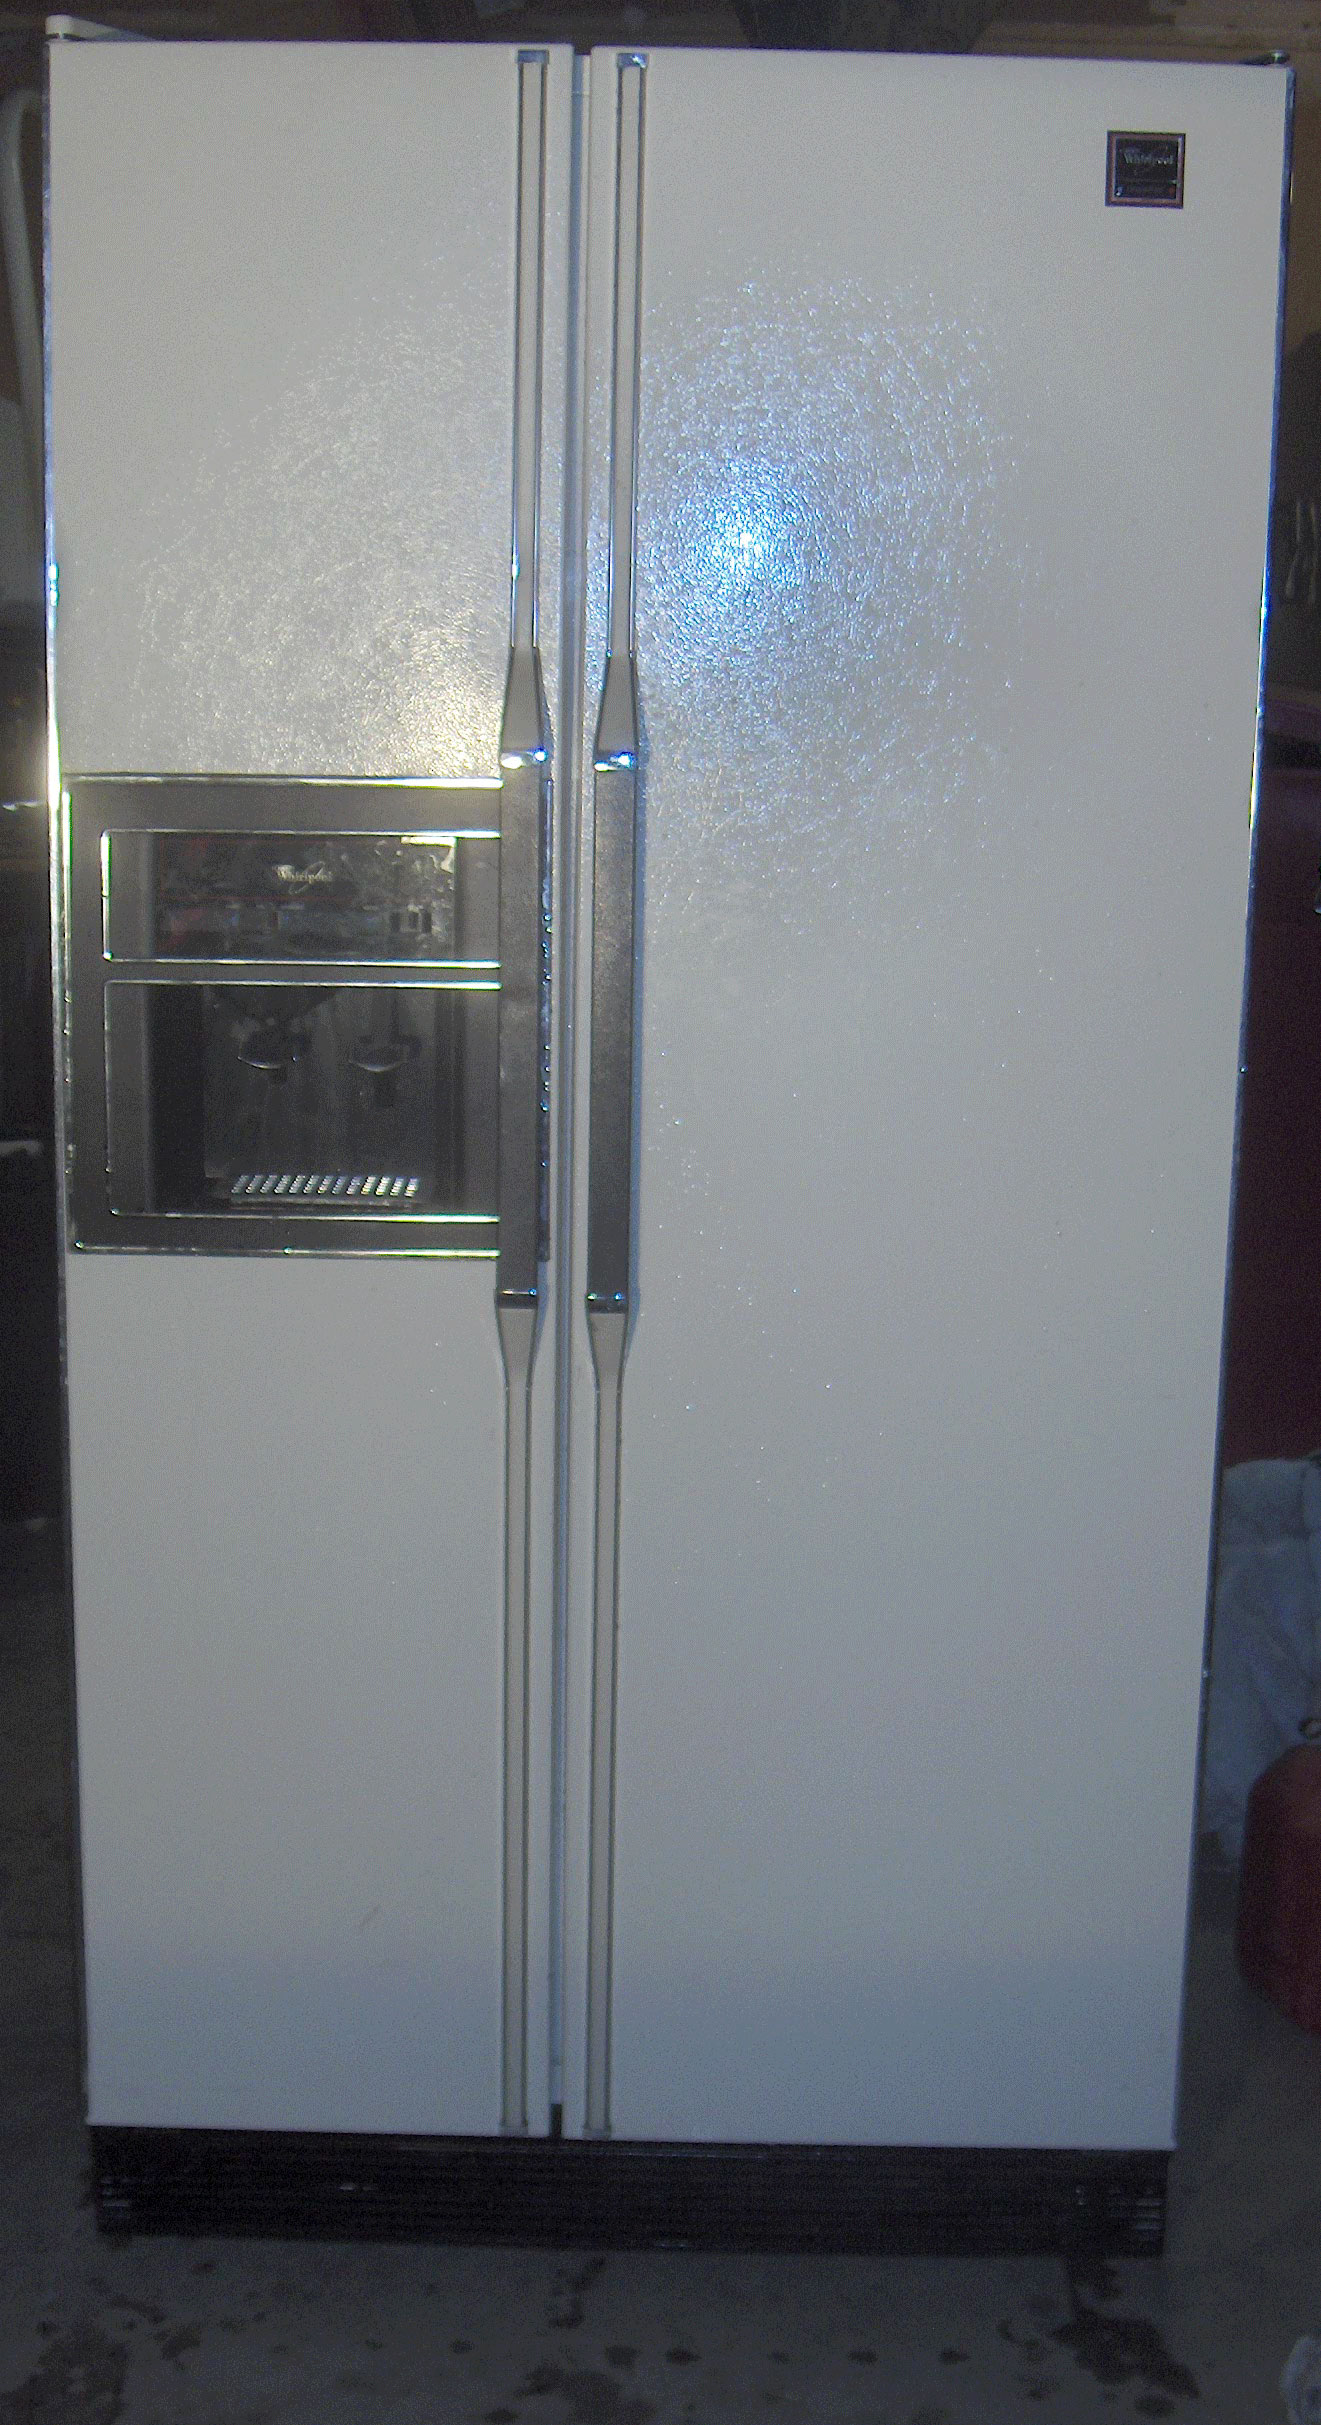 Used fridge for sale sacramento